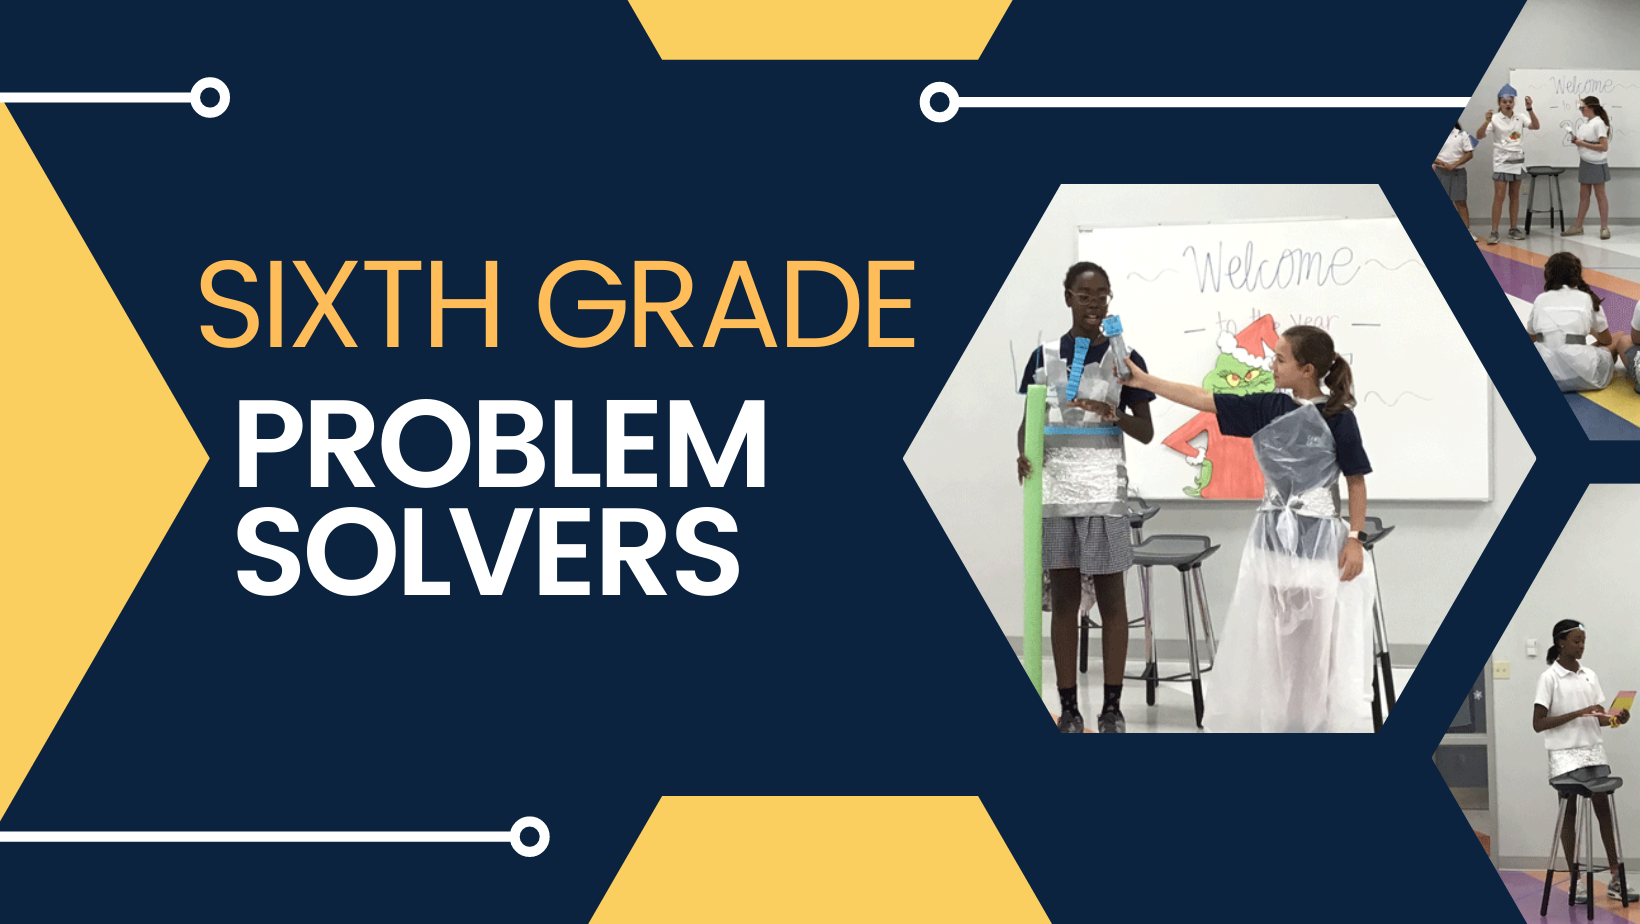 Sixth grade problem solvers